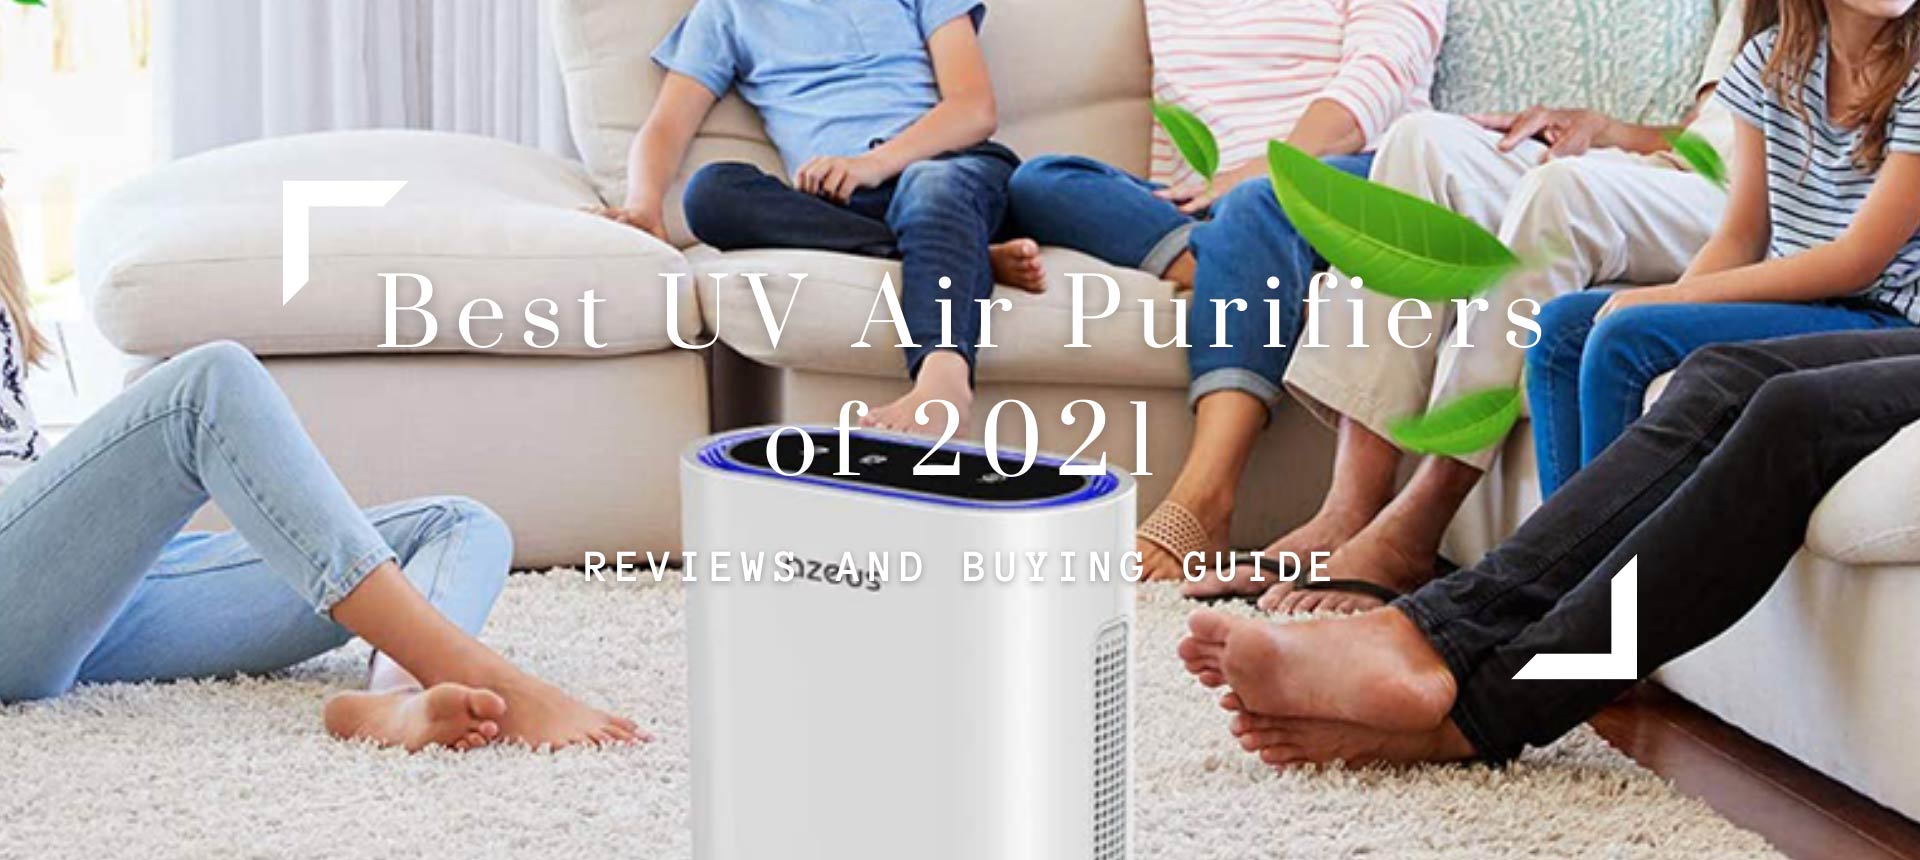 Best UV Air Purifiers of 2021